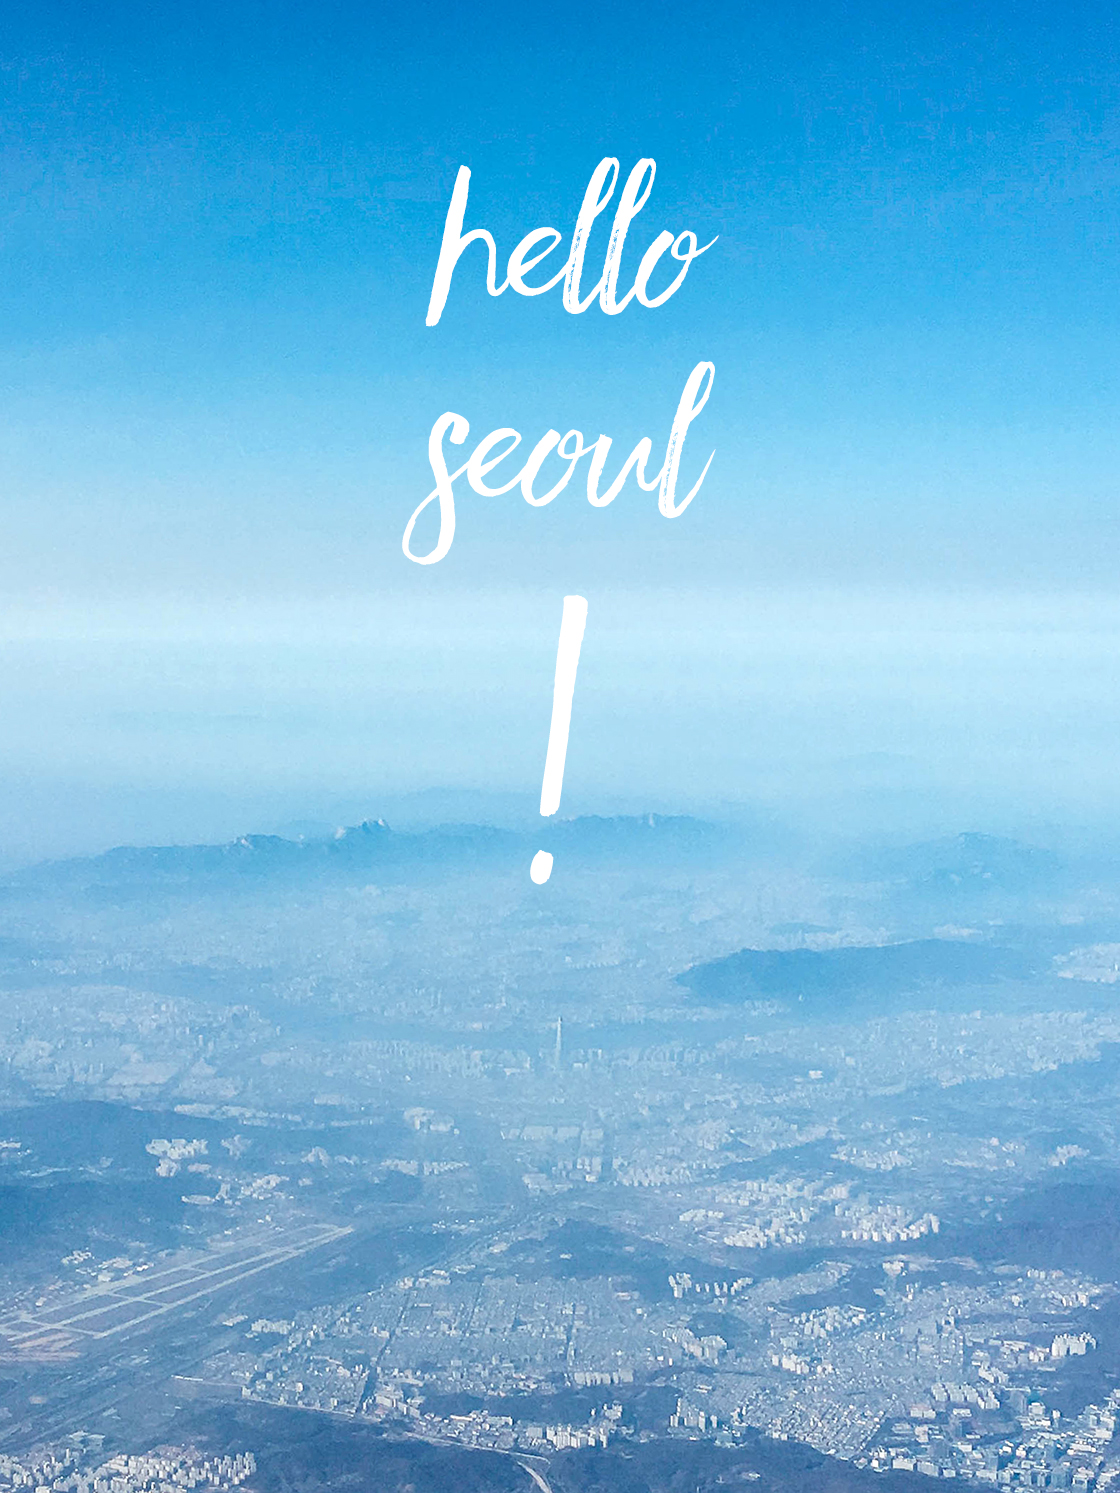 hellow seoul